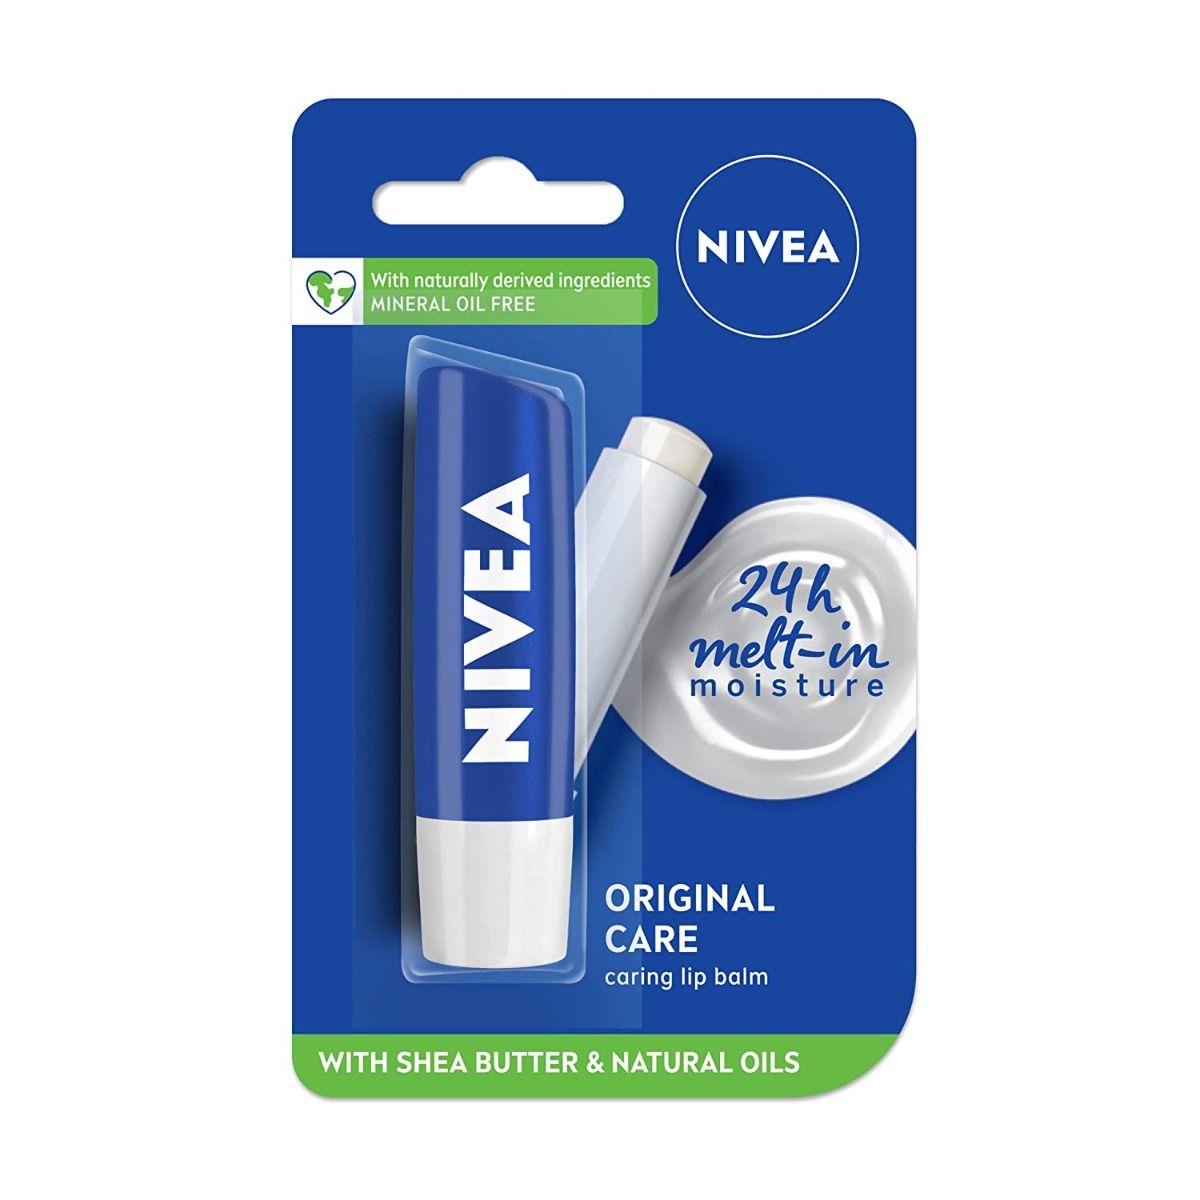 Nivea Original Care Caring Lip Balm, 4.8 gm, Pack of 1 